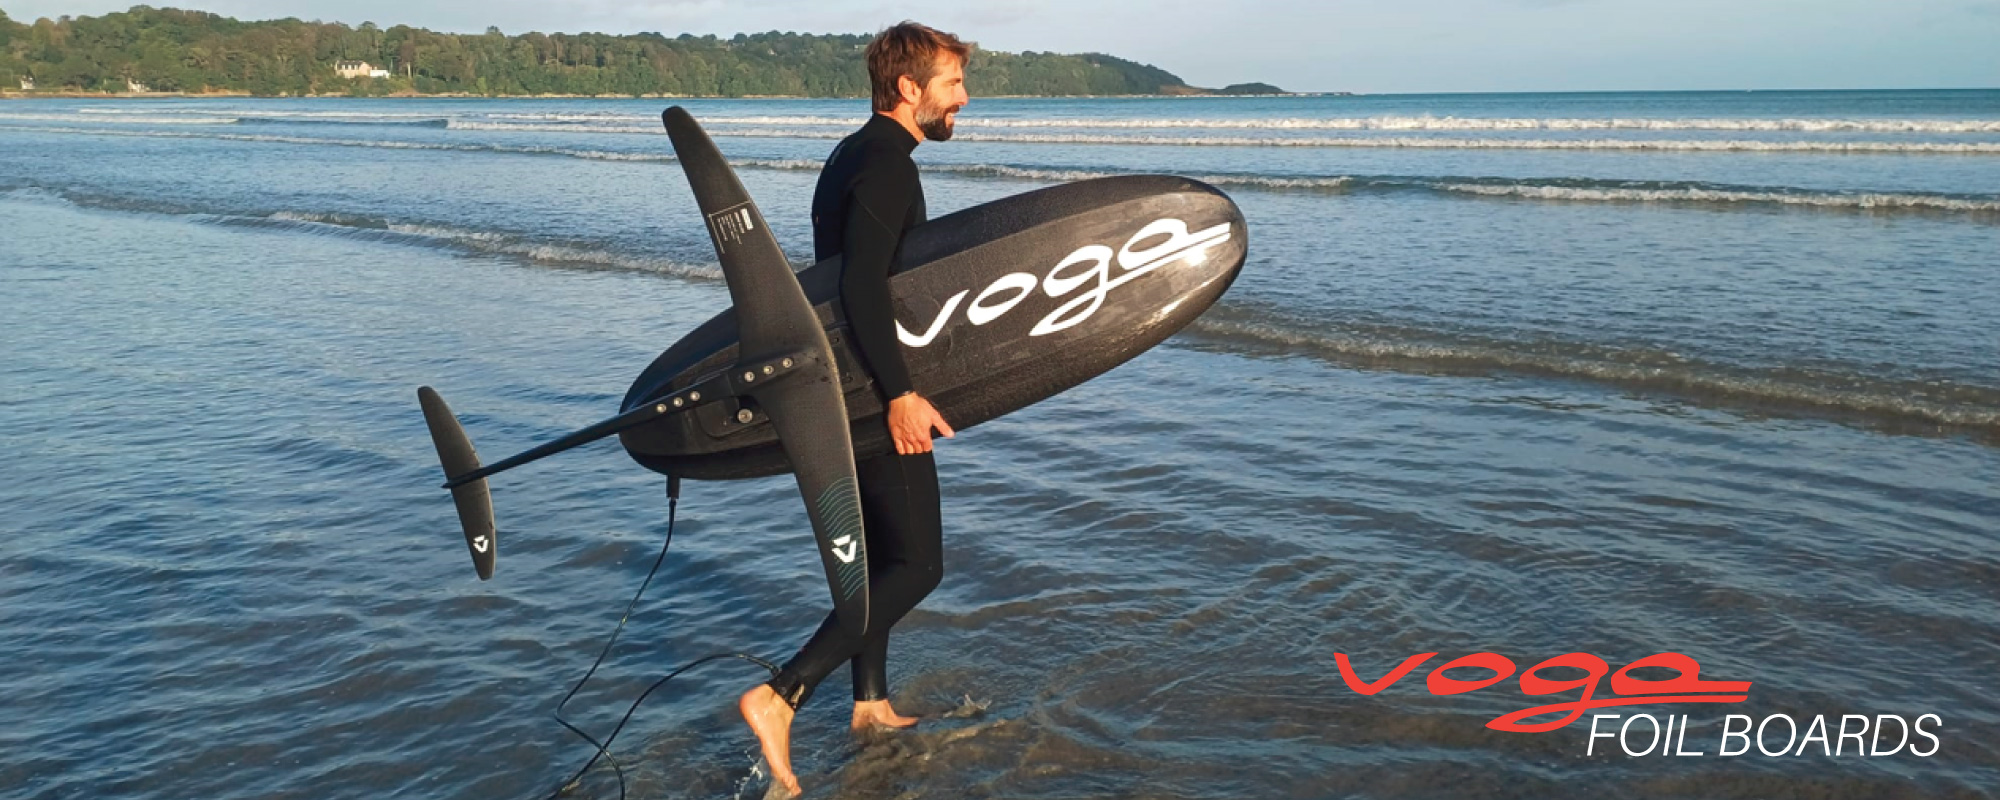 Voga Marine Products: Surf Foil Board range